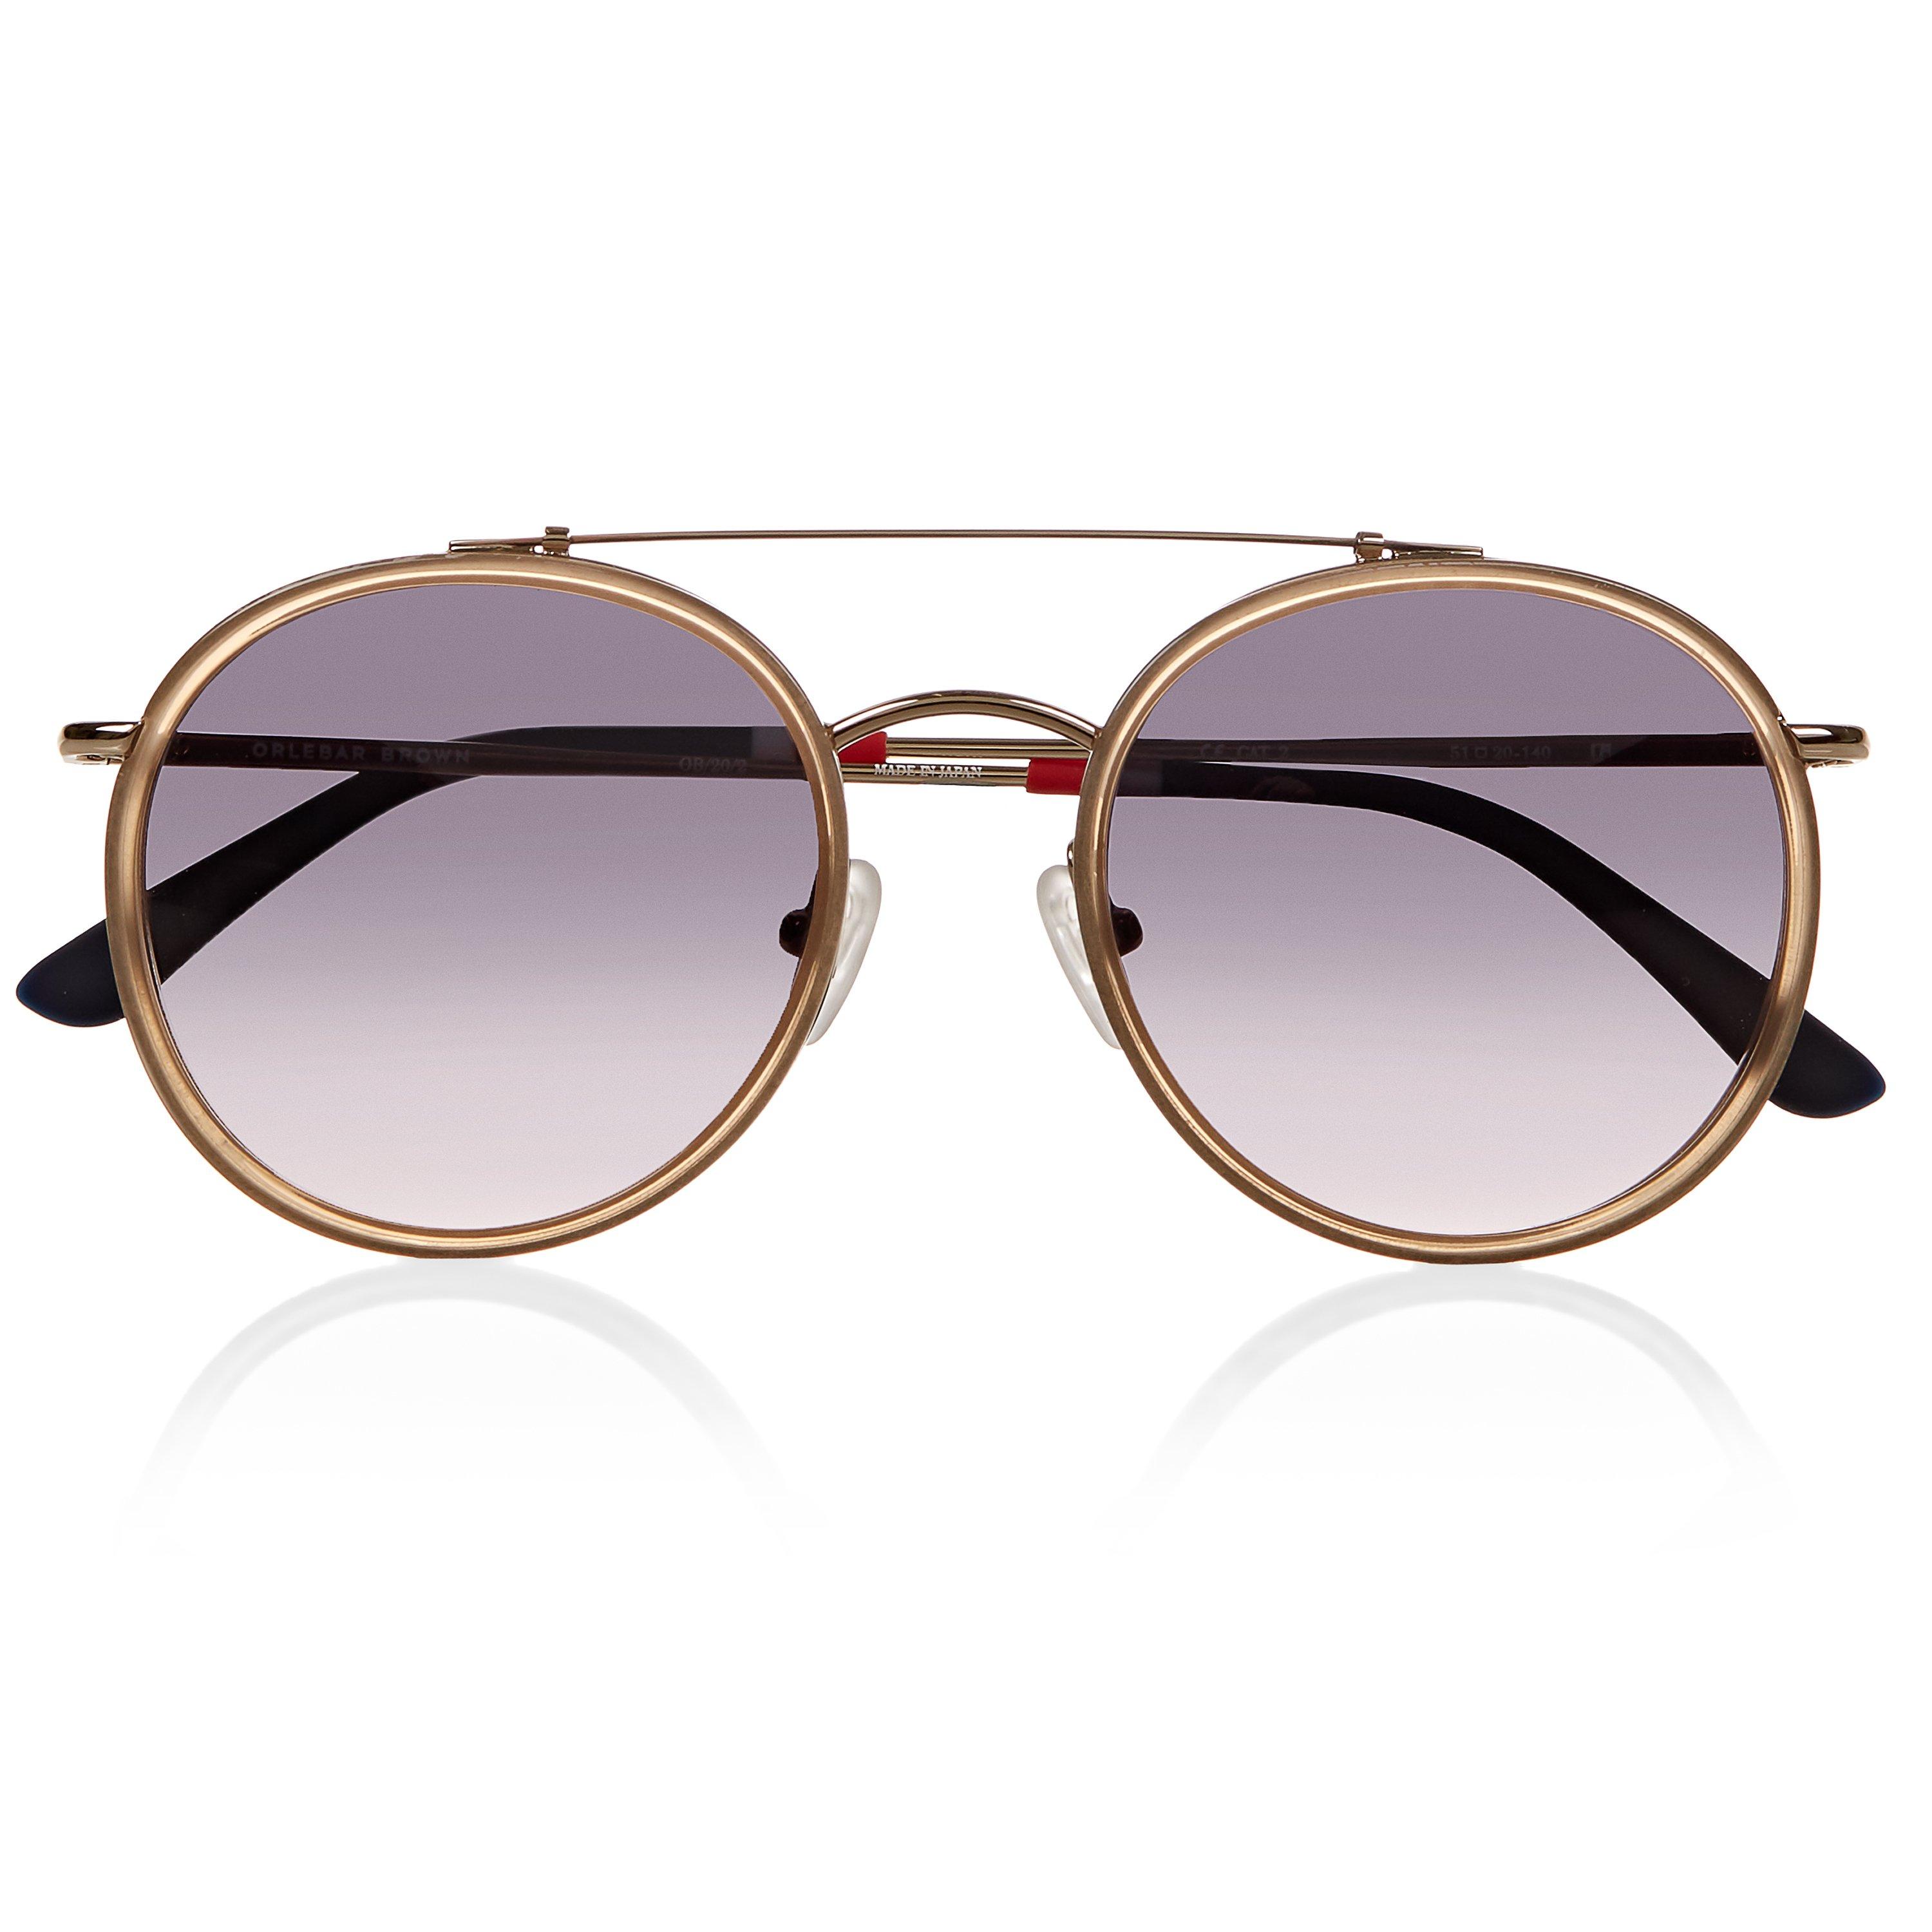 Men's designer sunglasses | Orlebar Brown